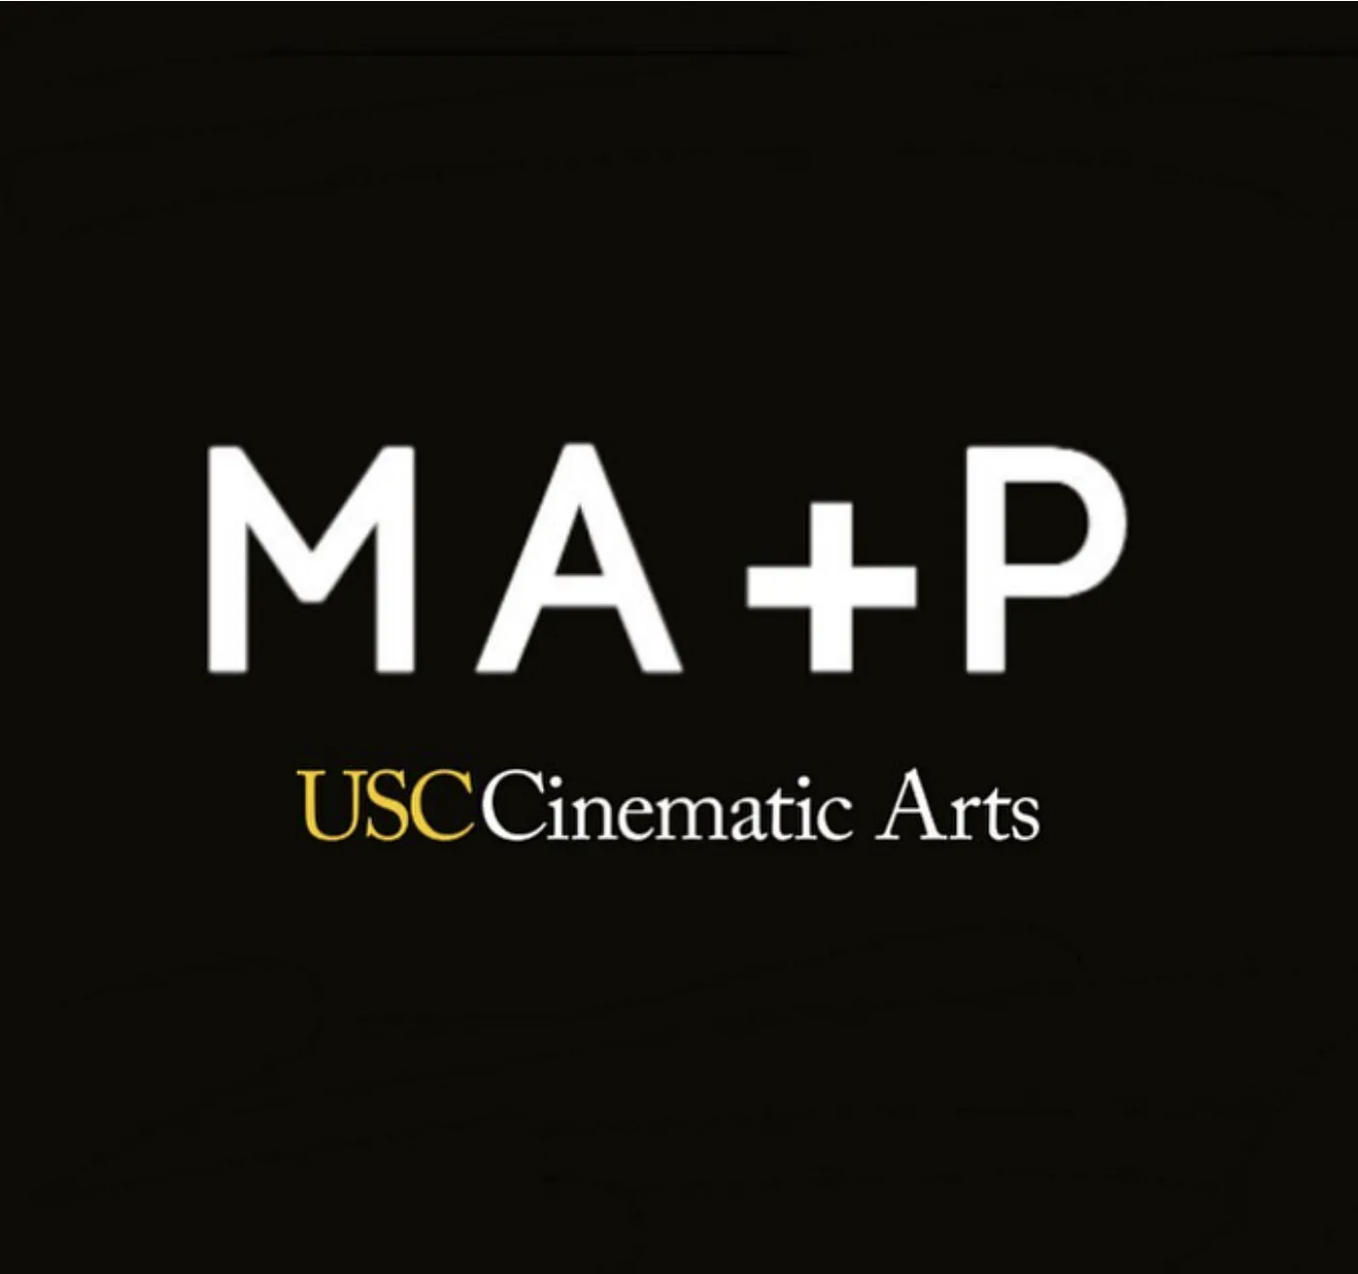 Image description: logo for USC Cinematic Arts MA+P.